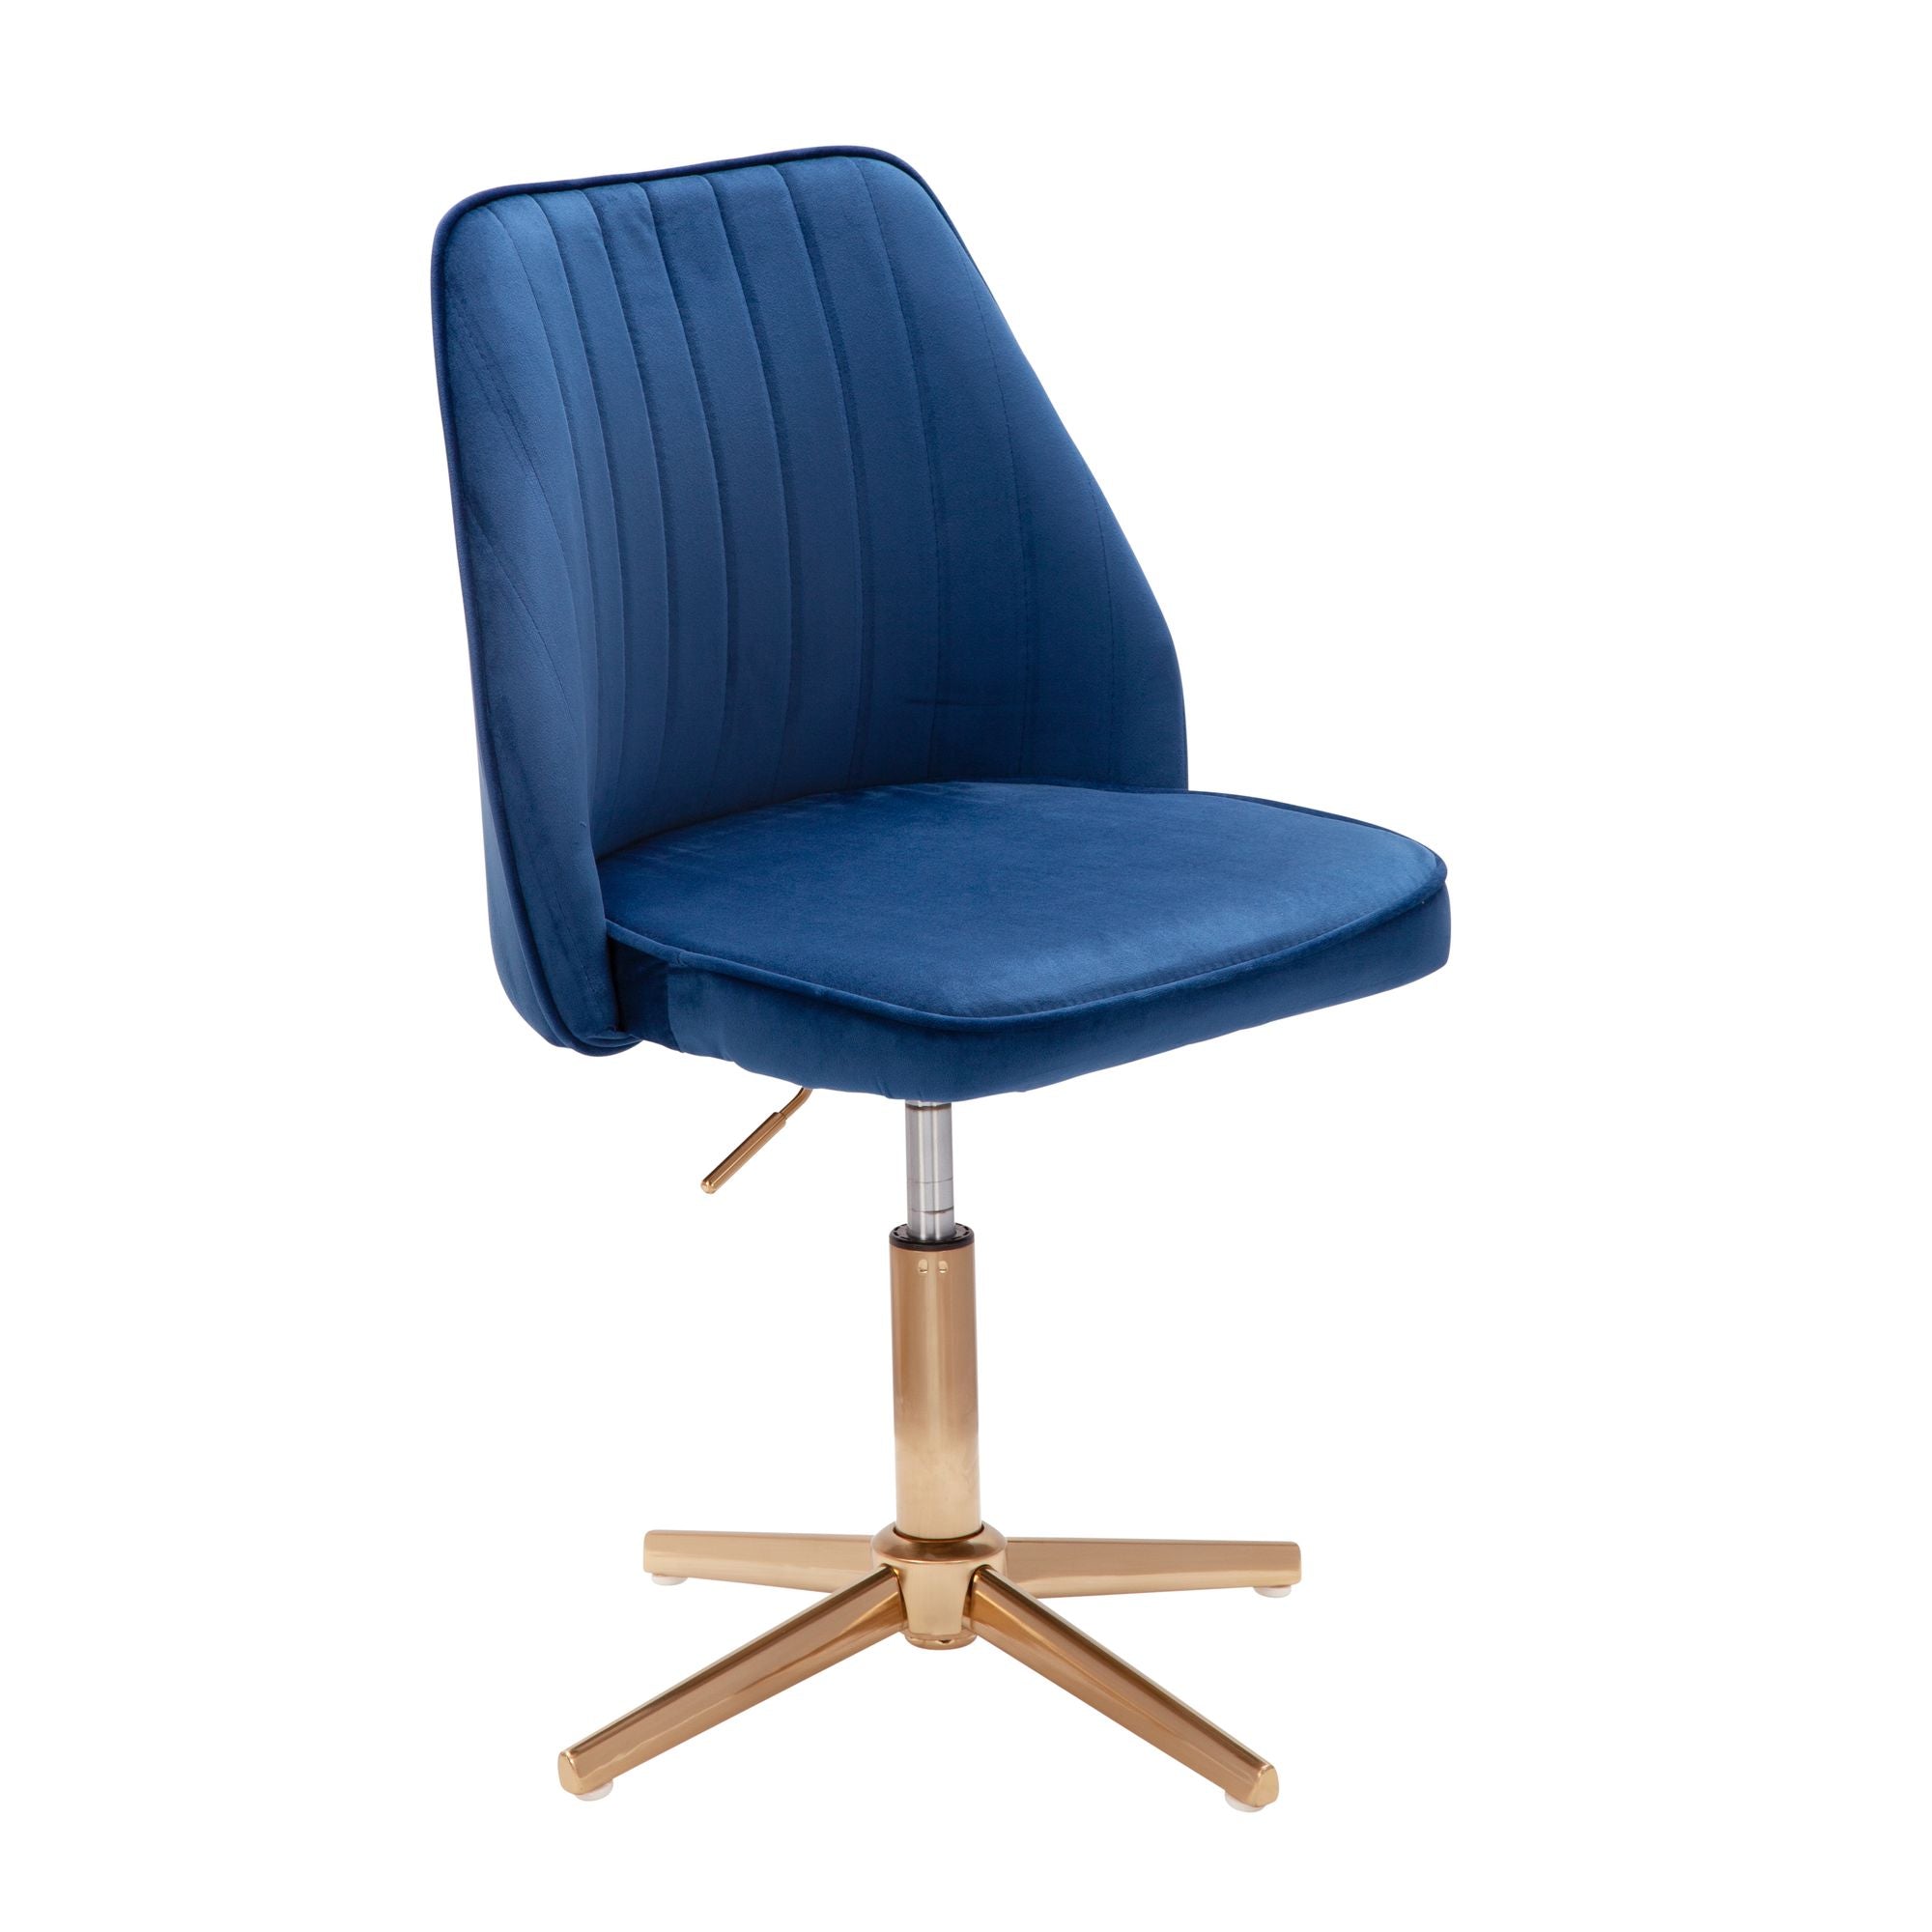 Nancy's Norwich Swivel chair - Kitchen chair - Office chair - Shell chair - Adjustable - Design - Velvet - Blue - Modern